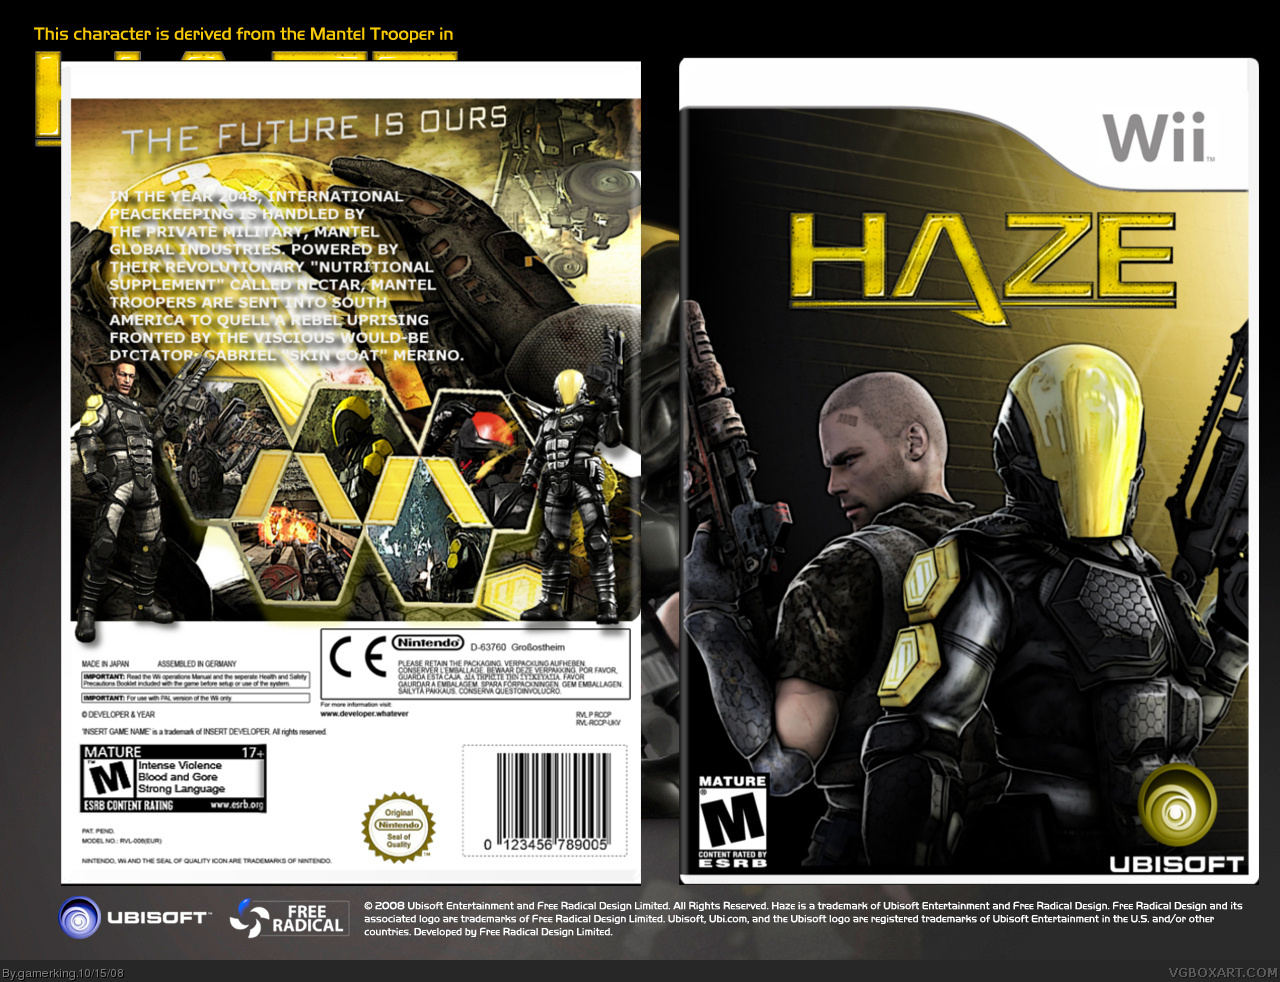 Haze box cover